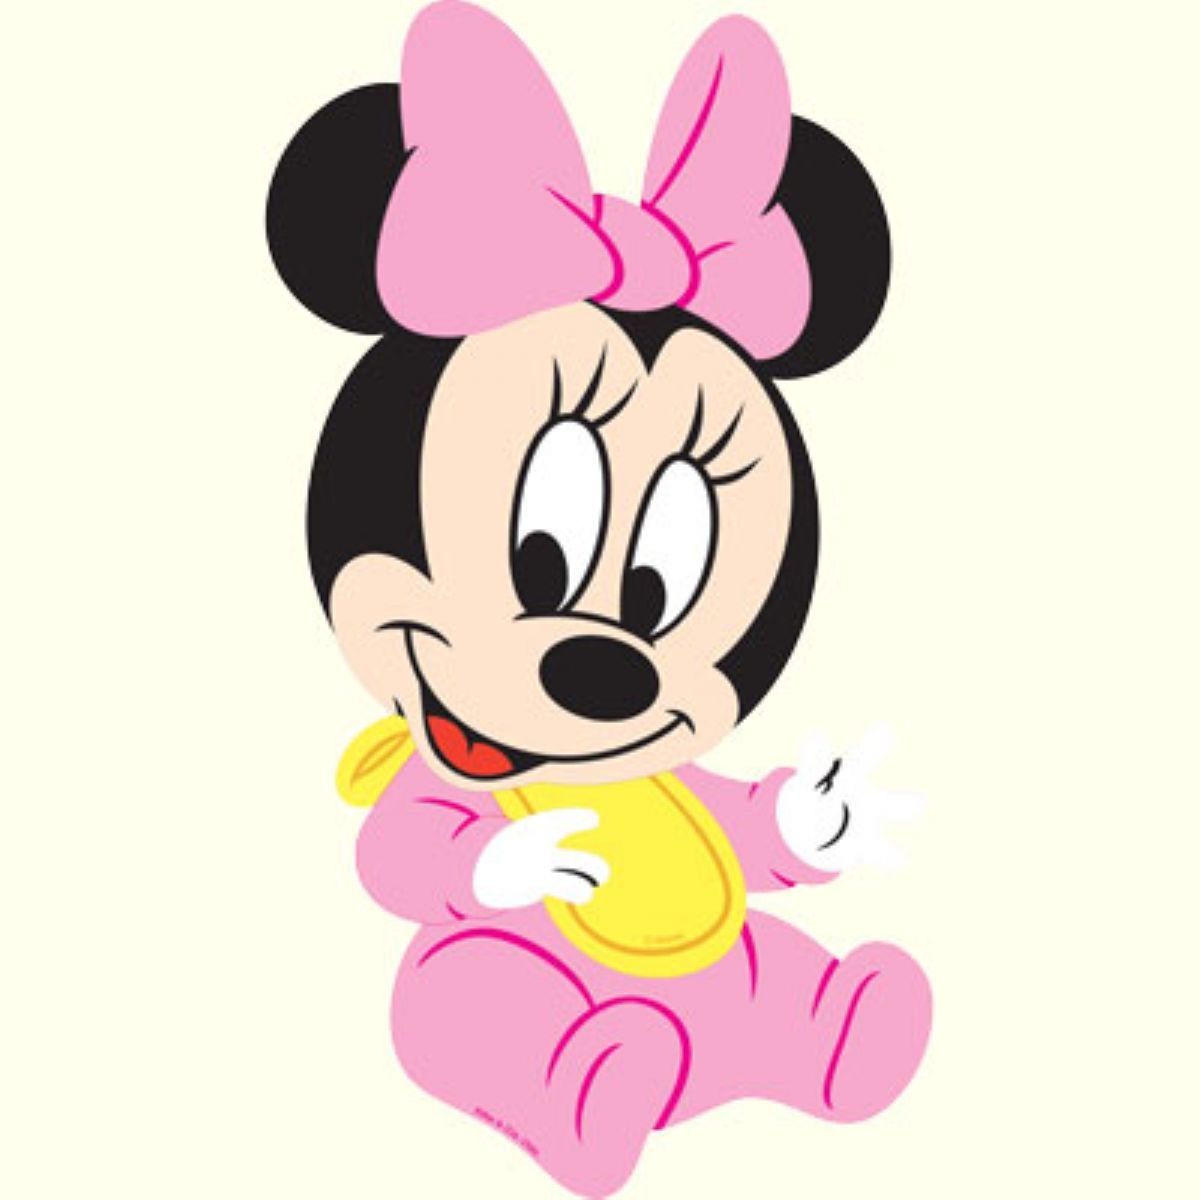  Minnie Mouse Hintergrundbild 1200x1200. Baby Minnie Mouse Wallpaper